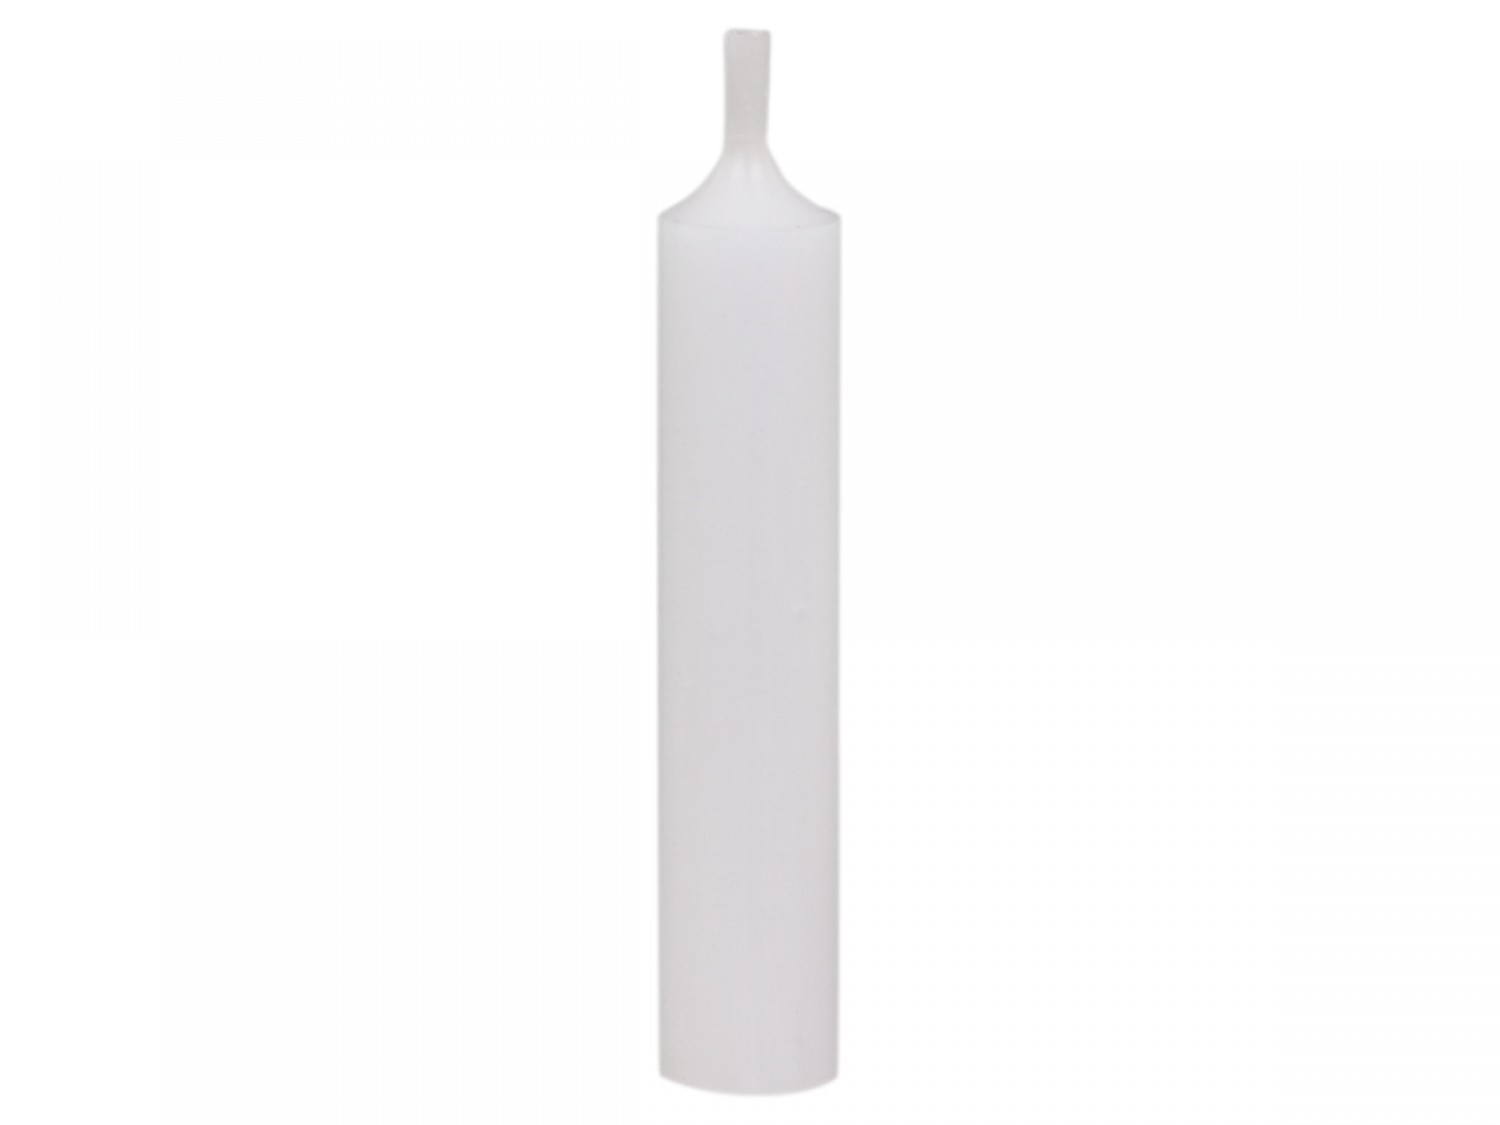 Bílá úzká krátká svíčka Short dinner white - Ø 2 *11cm / 4.5h 70085401 (70854-01)